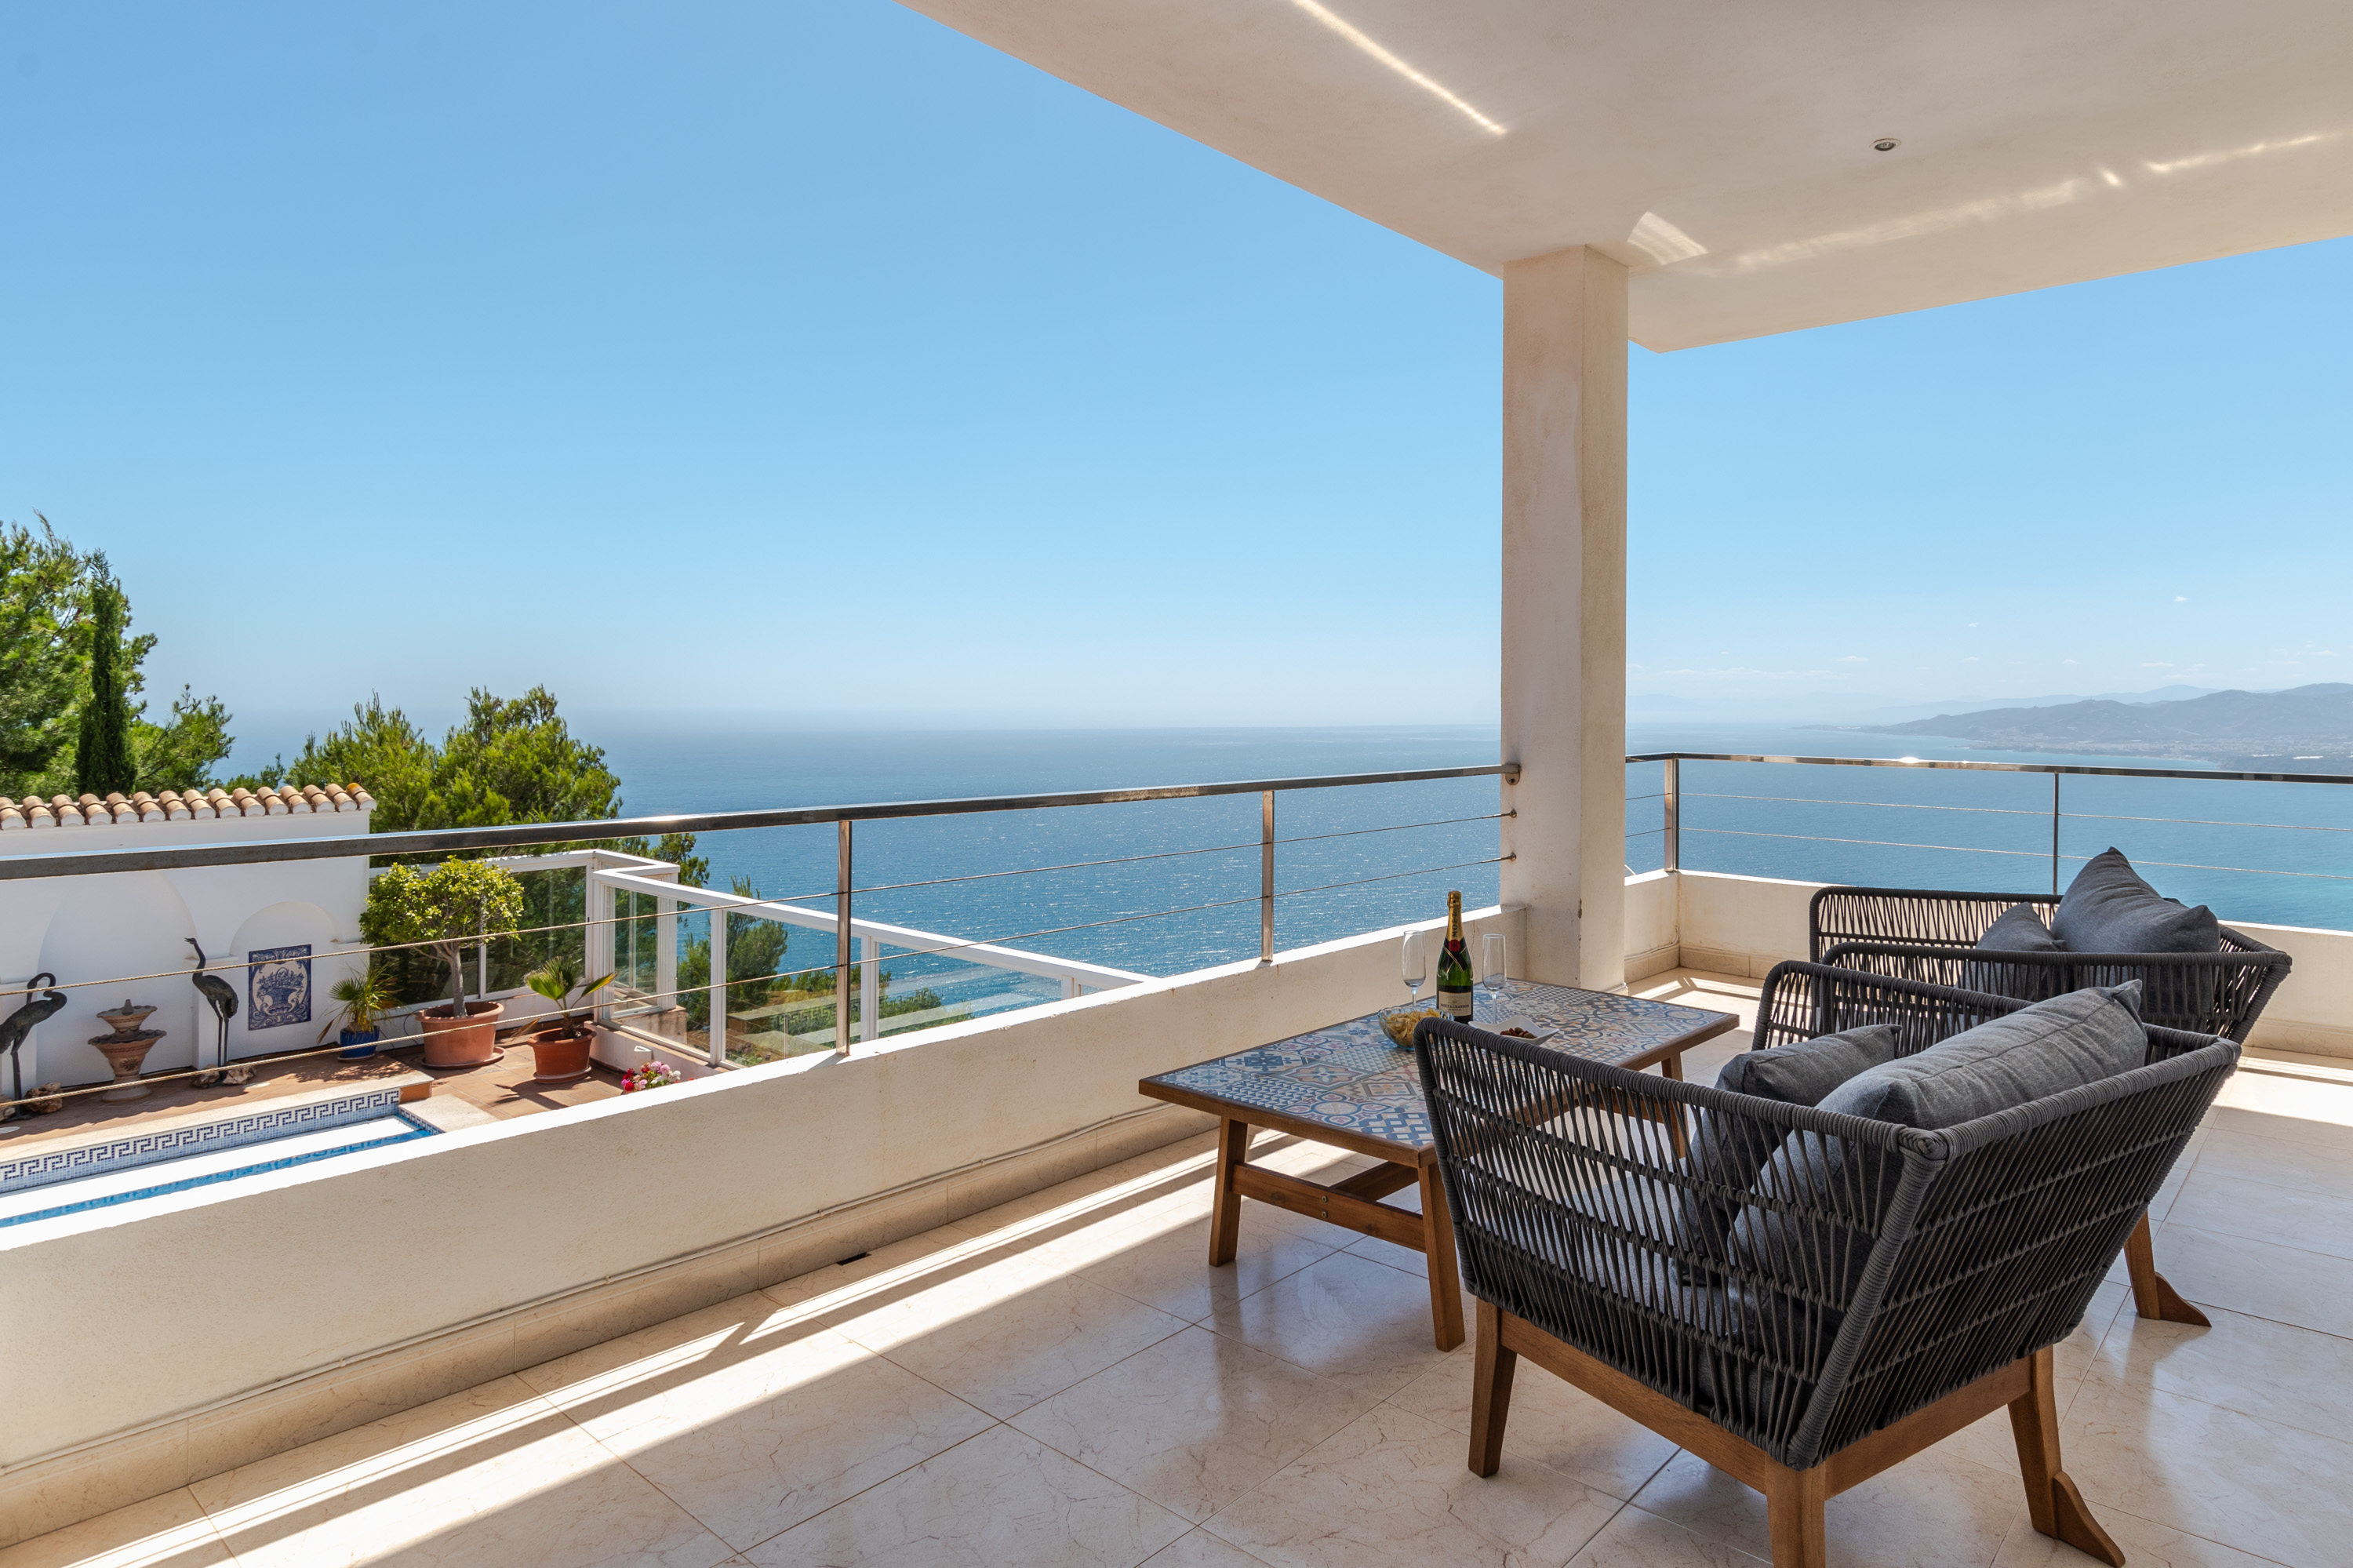 CERRO GORDO luxury 4 bedroom villa with spectacular views of coast and 